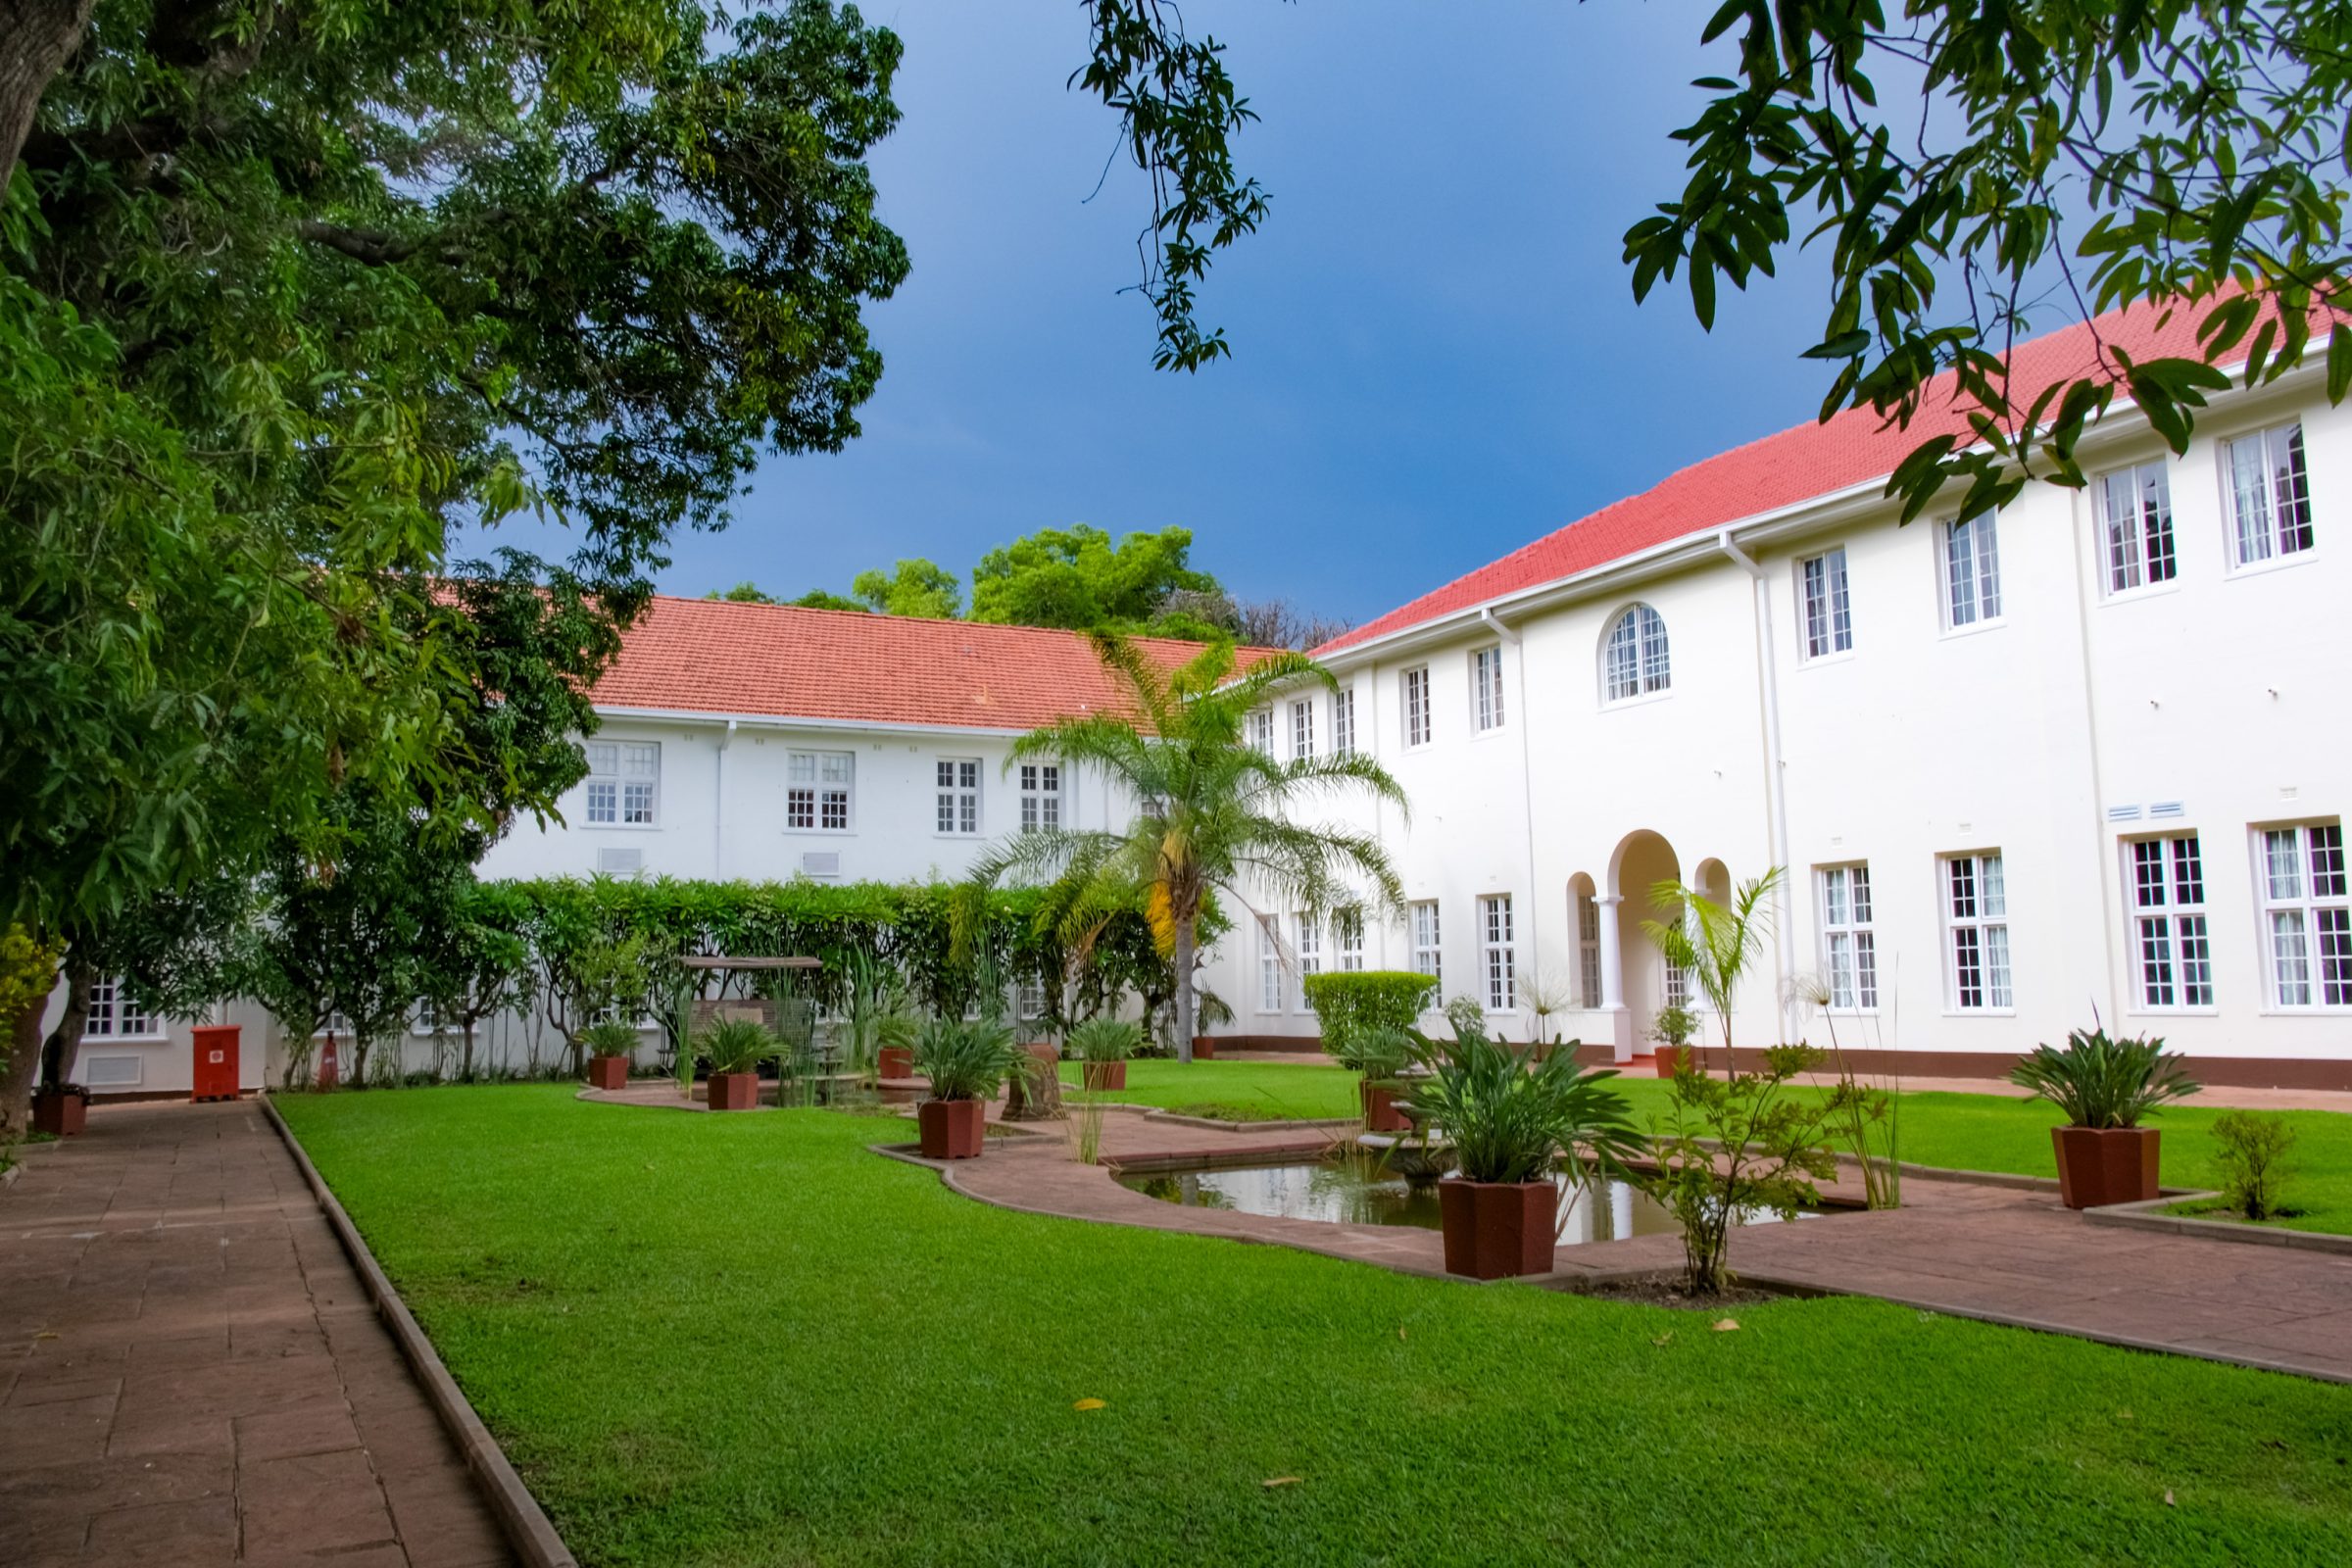 The courtyard garden of Victoria Falls Hotel